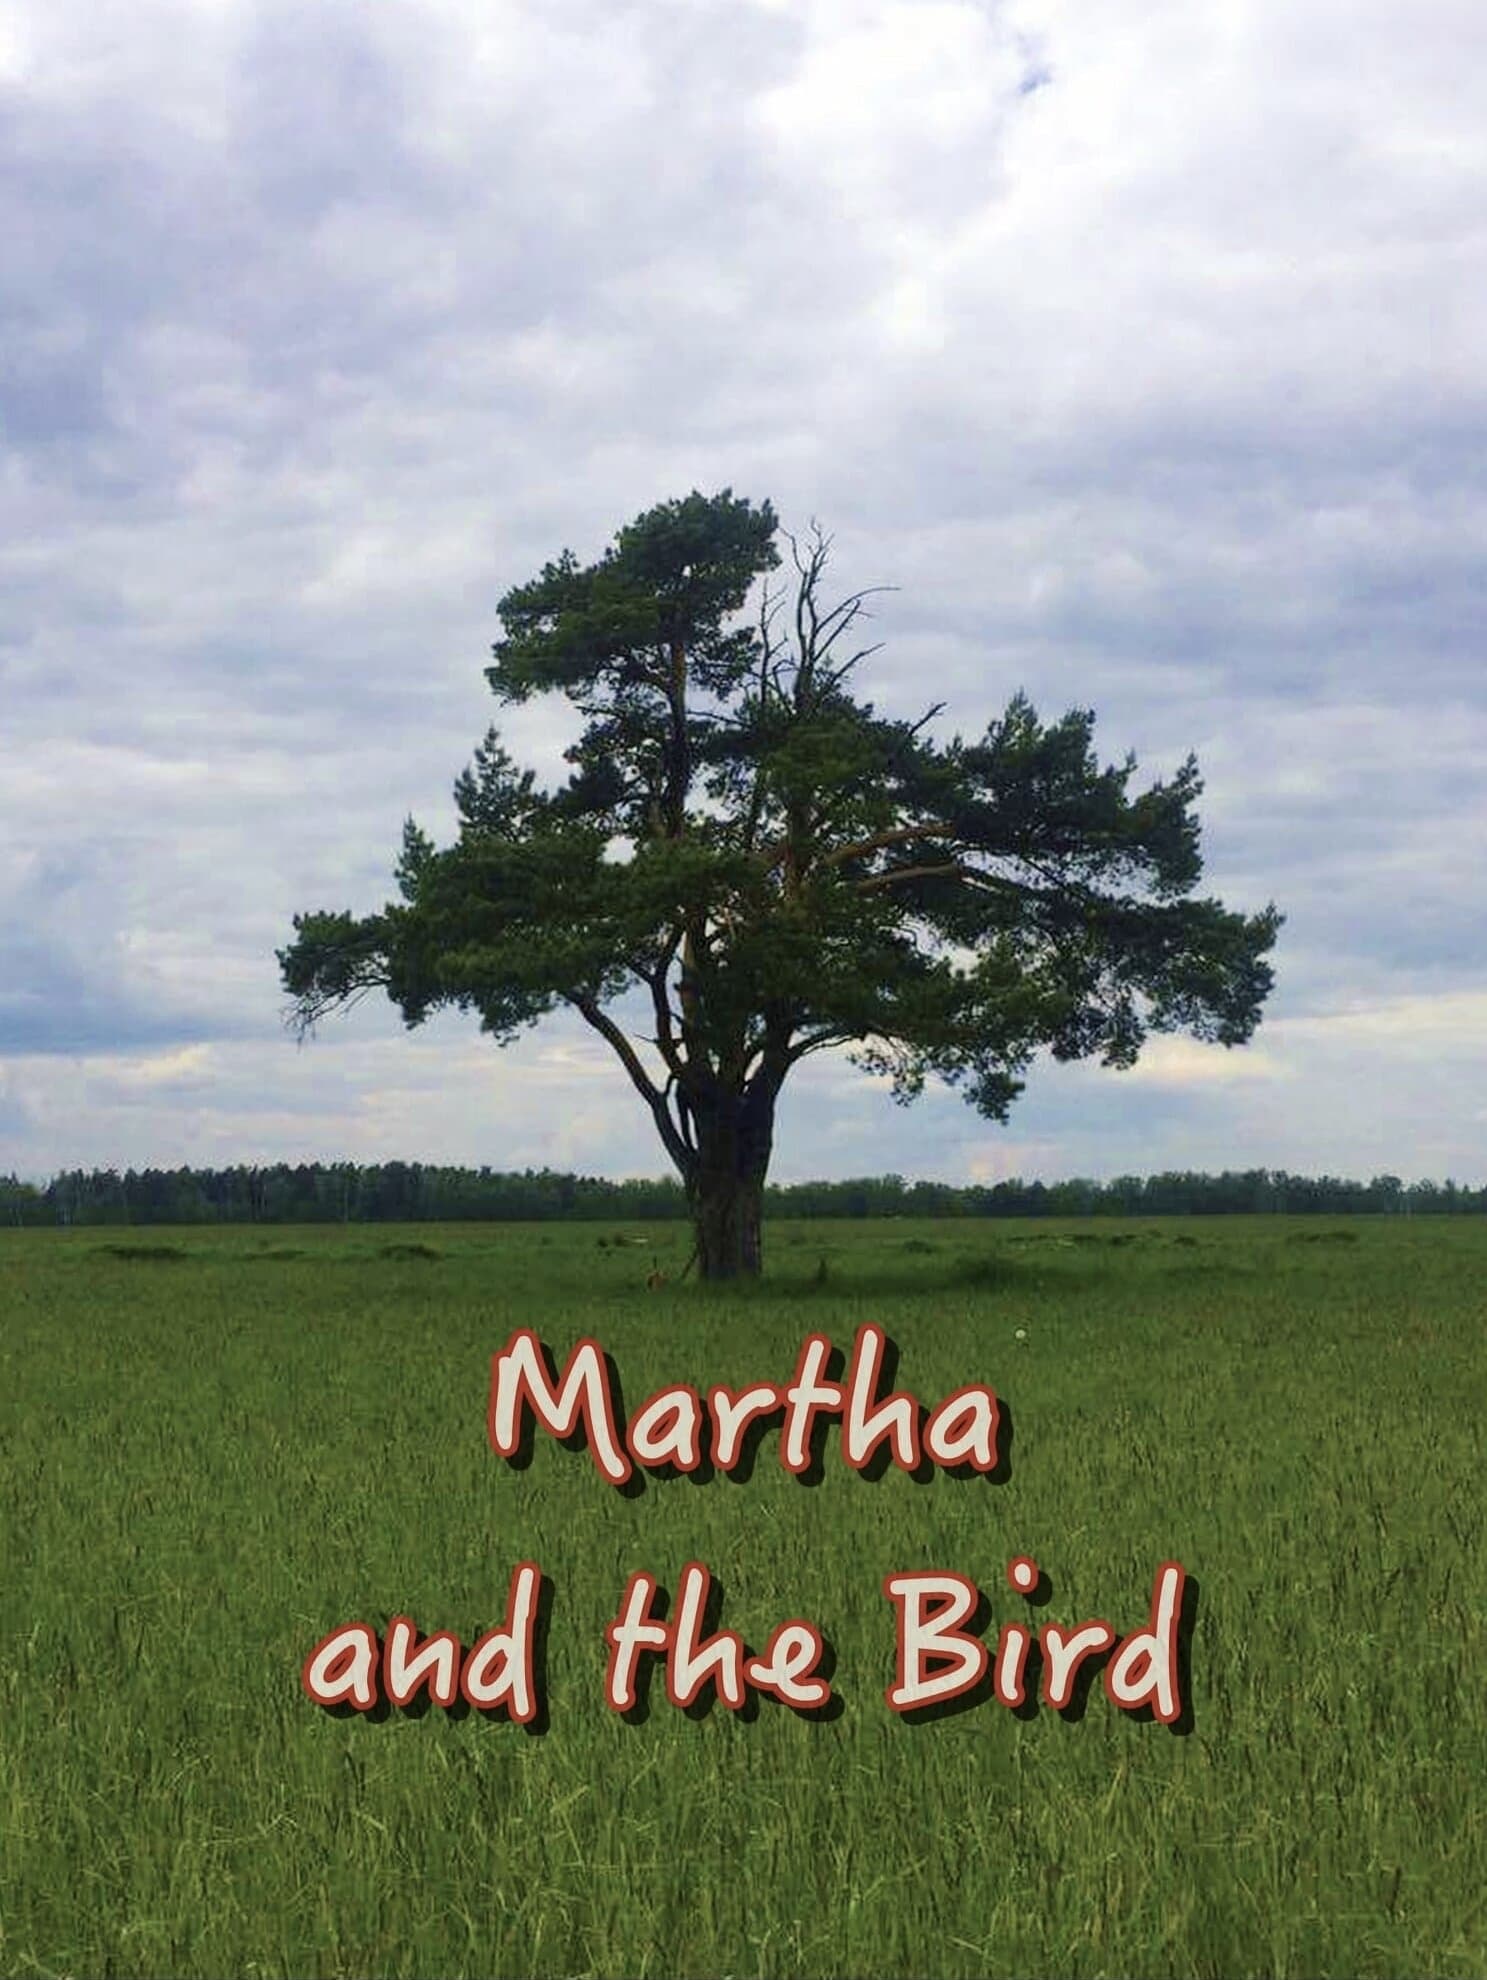 Martha and the Bird